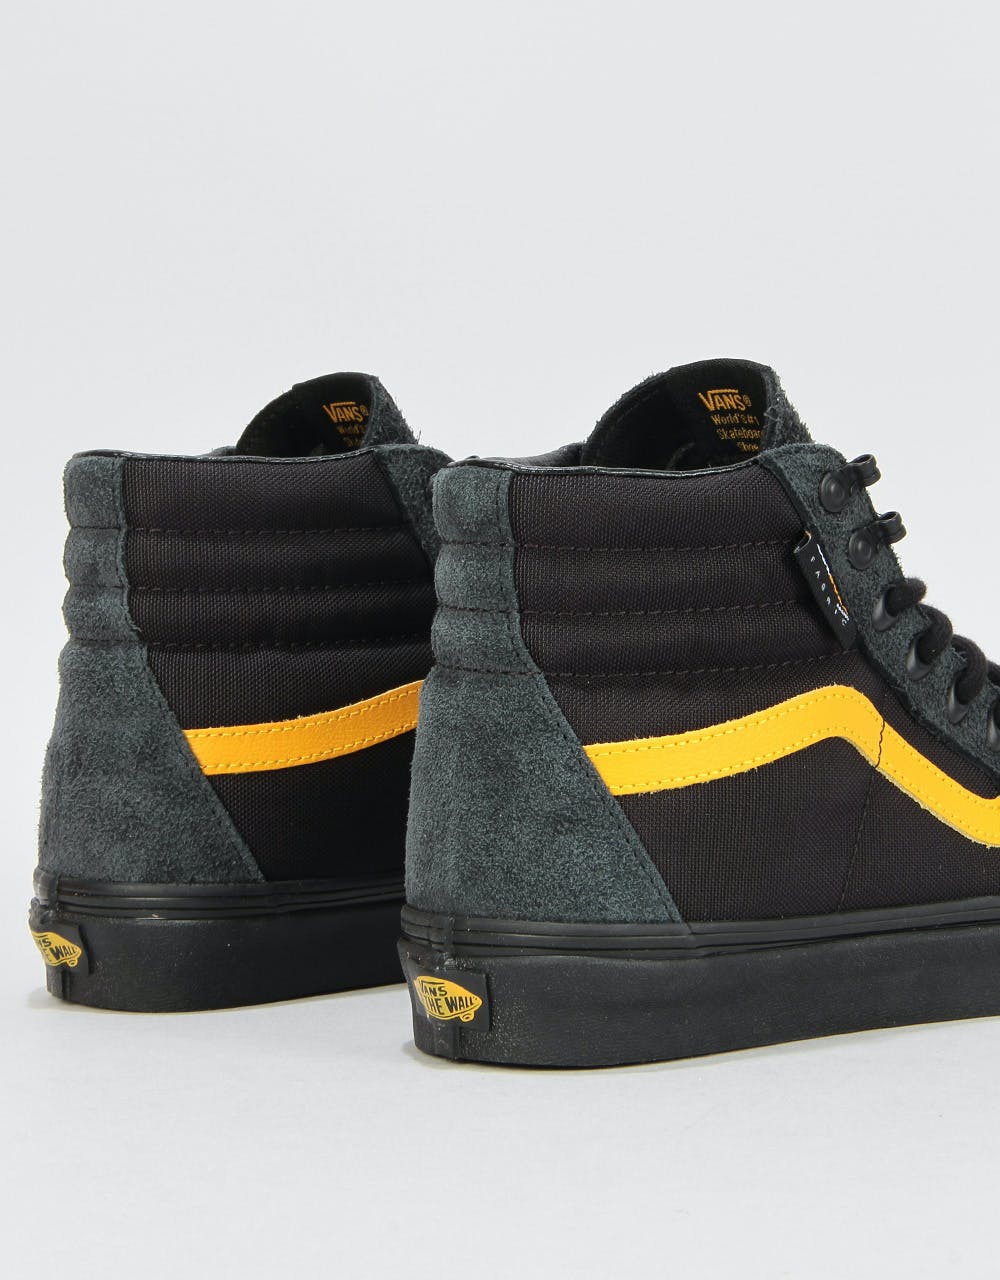 Vans Sk8-Hi Skate Shoes - (Cordura) Black